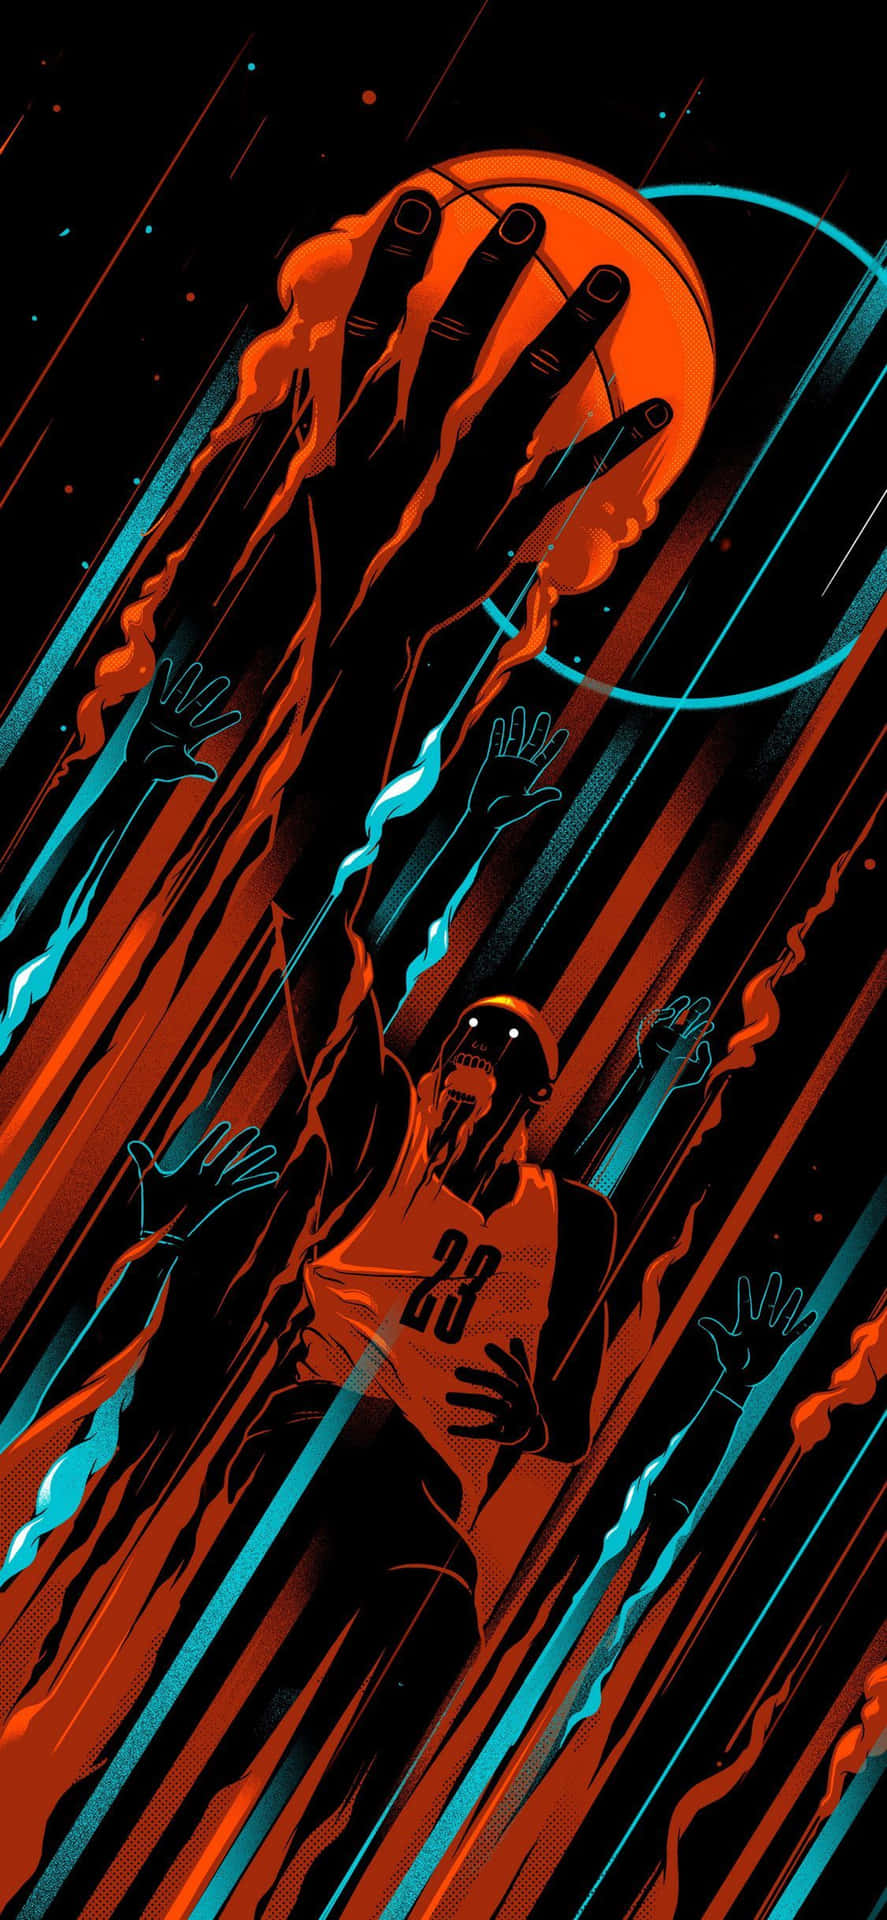 Lebron James Black Basketball Digital Art